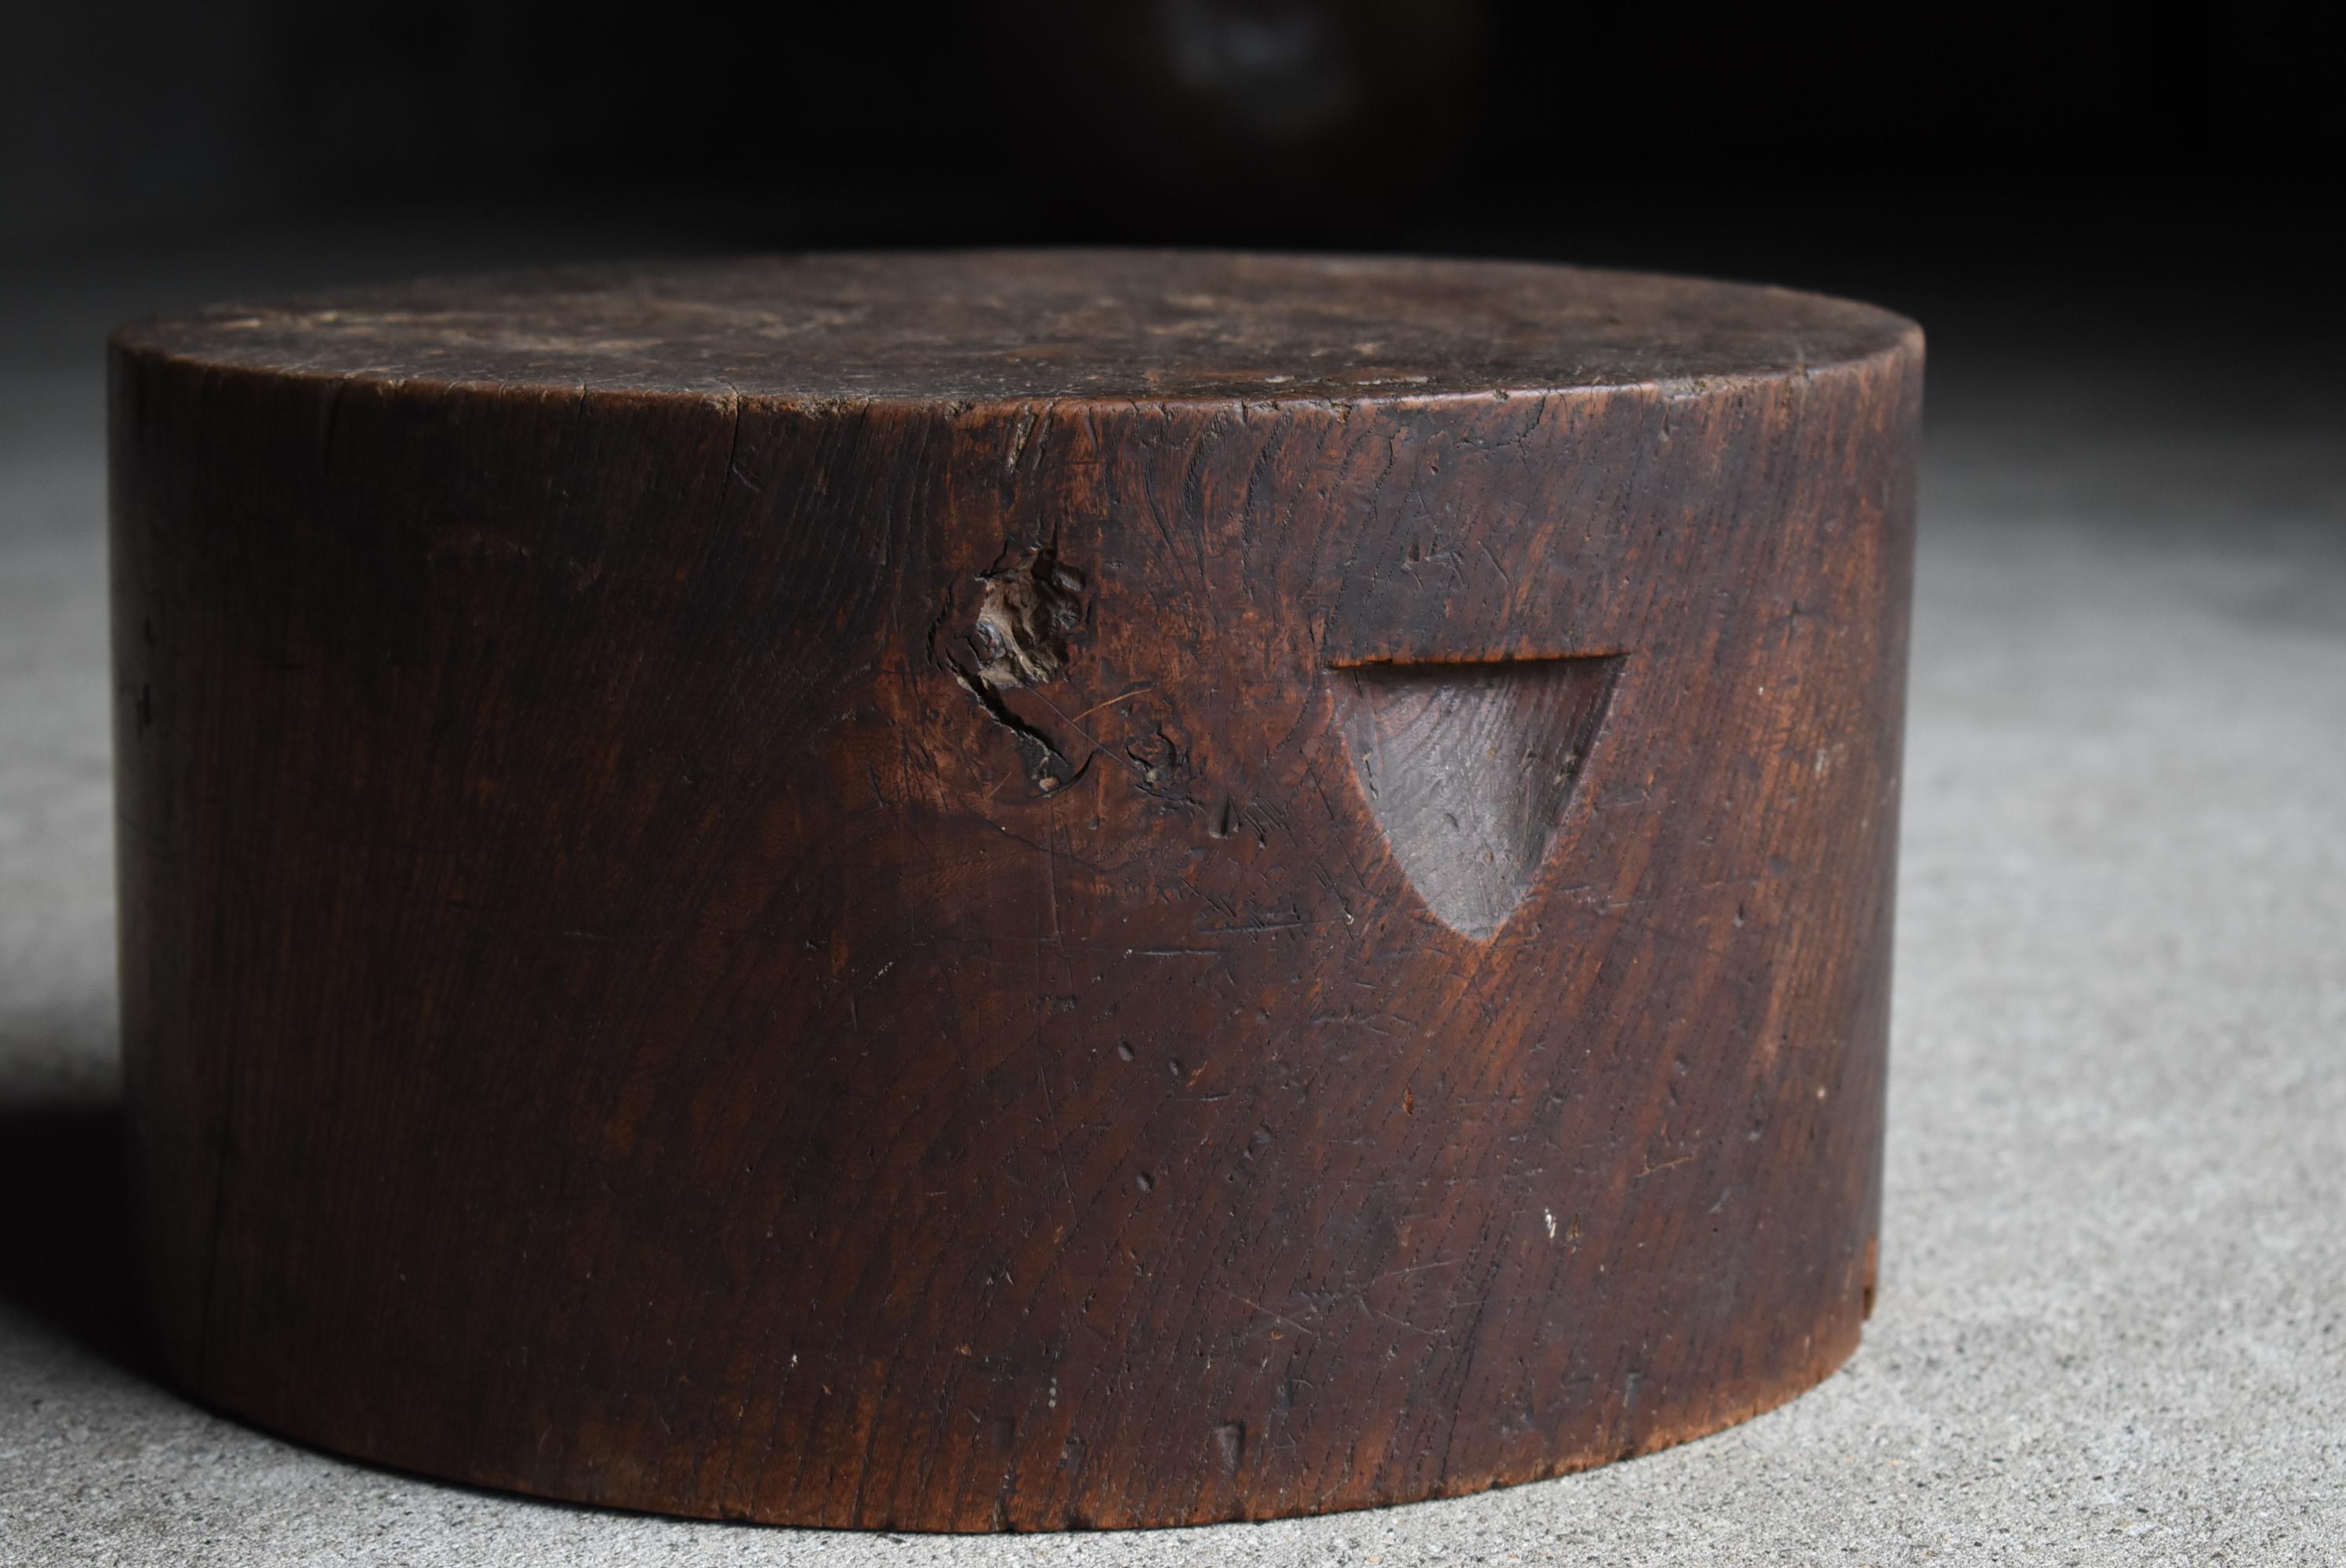 Japanese Antique Wooden Block Stool 1860s-1900s / Primitive Wabi Sabi Wood Chair 1